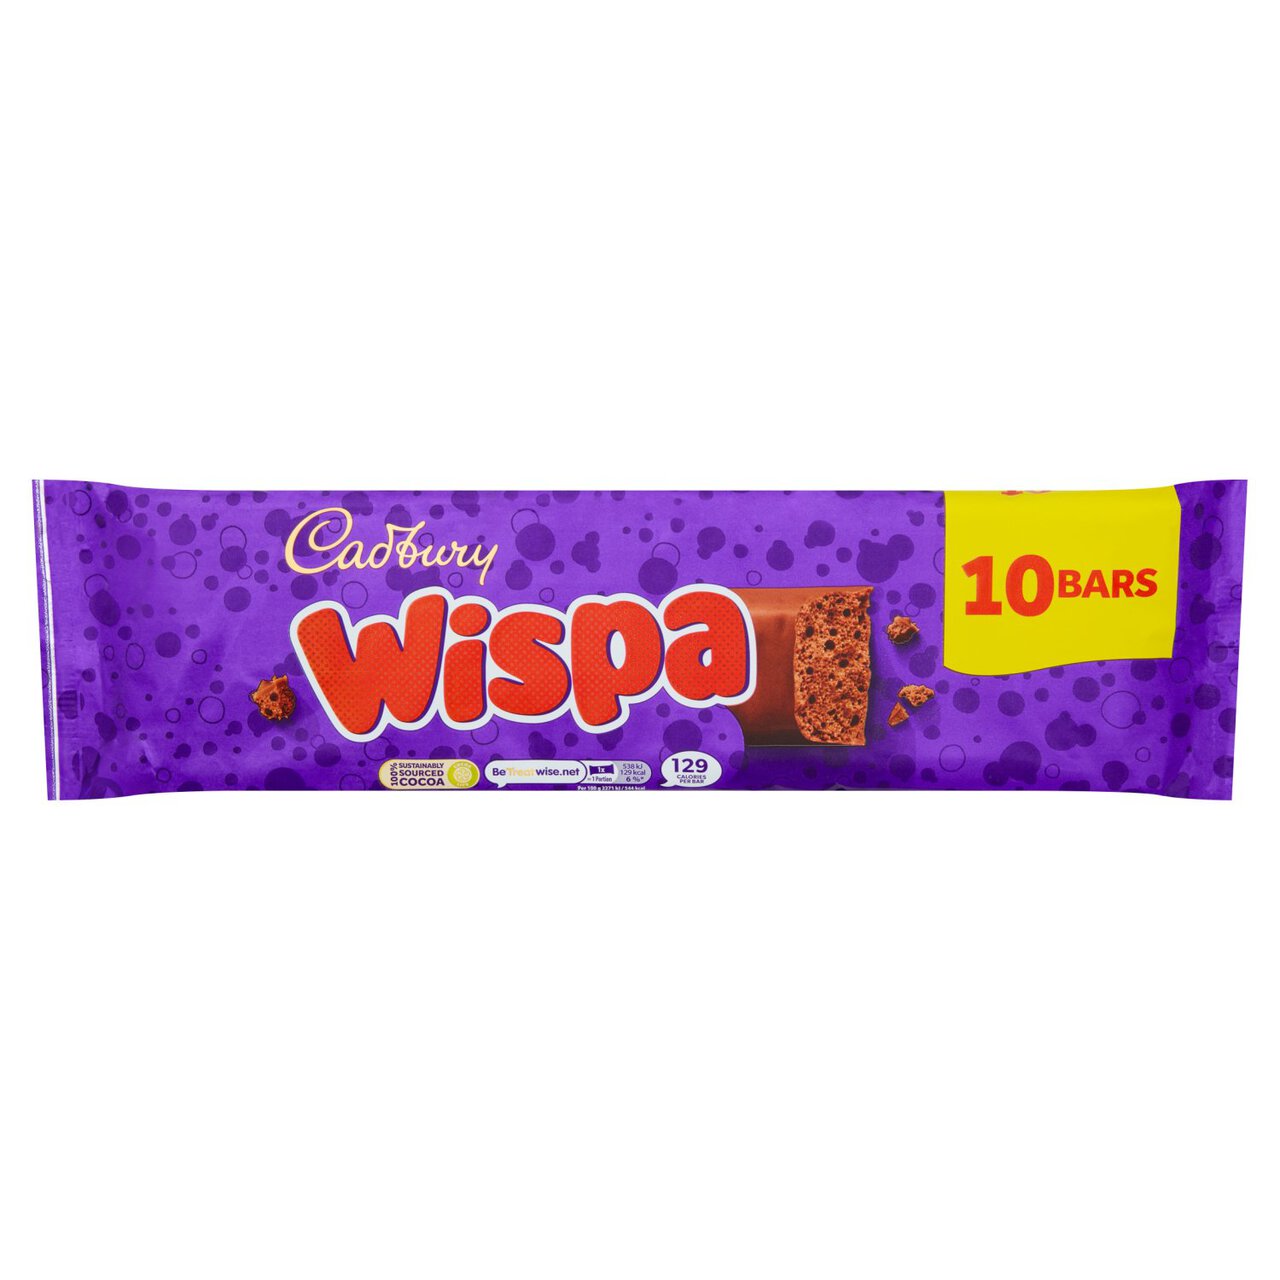 Cadbury Wispa Chocolate Bars 10 x 25g